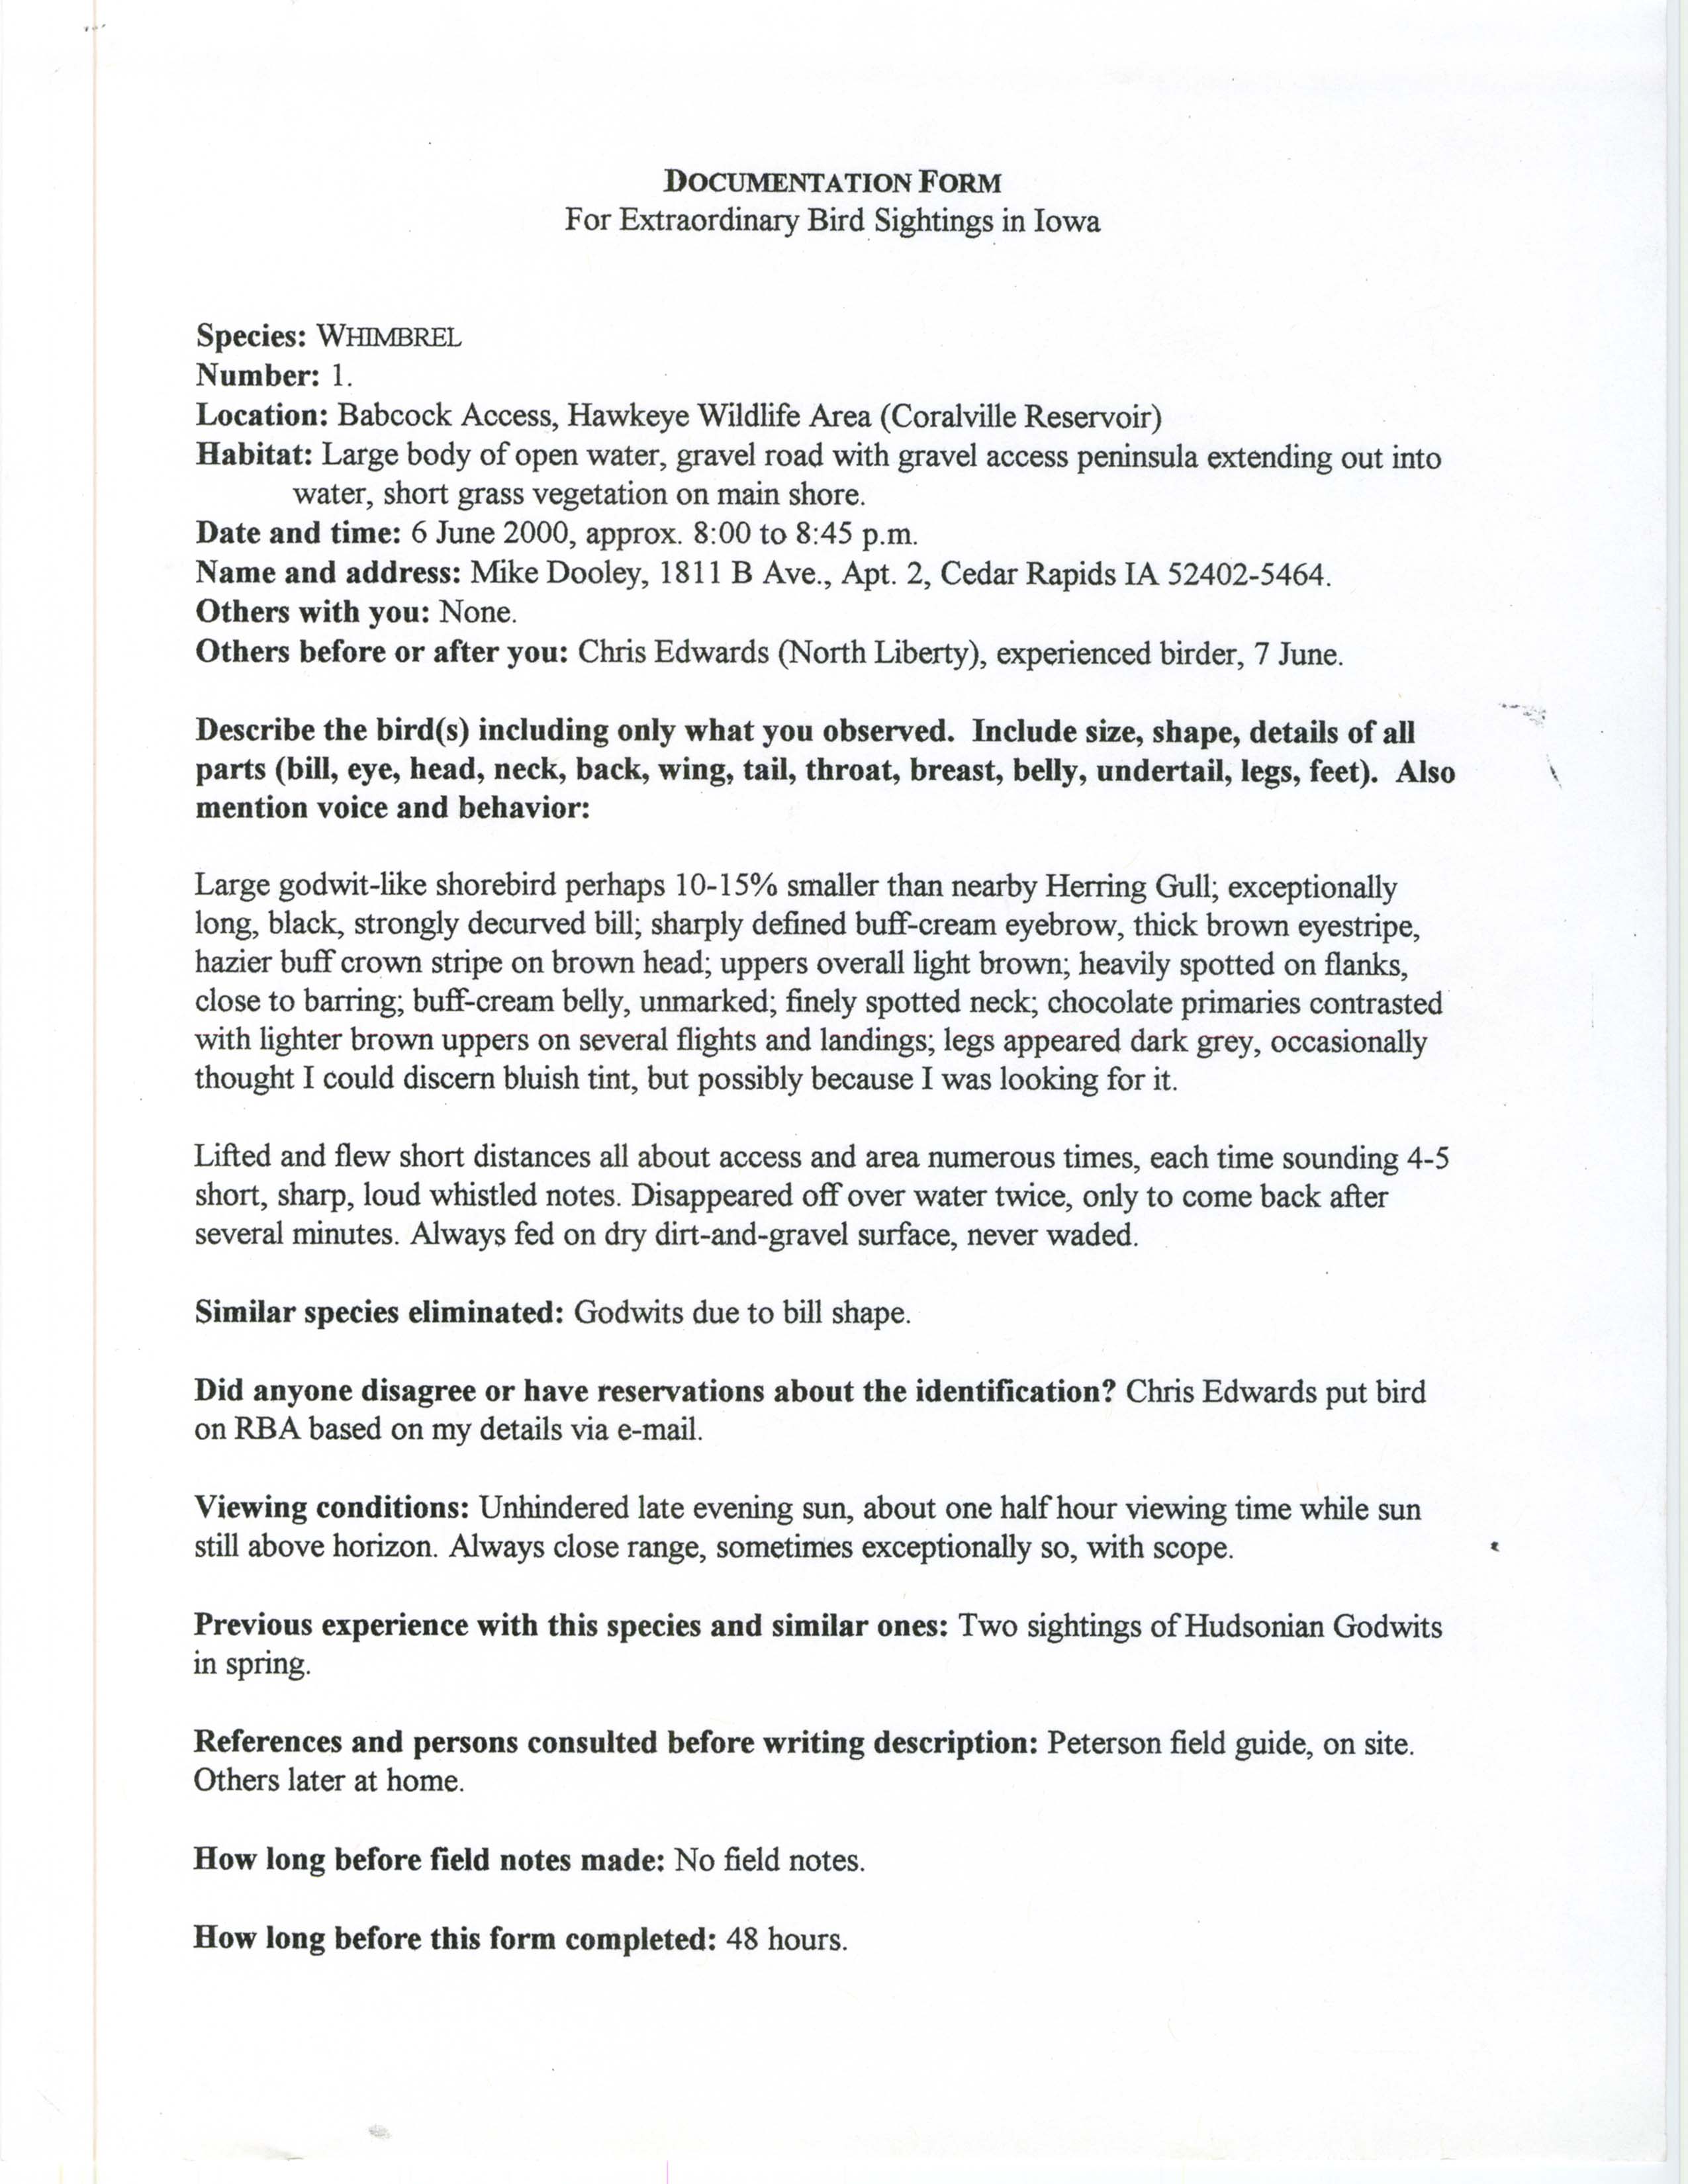 Documentation form for extraordinary bird sightings in Iowa, Whimbrel, Michael C. Dooley, June 6, 2000